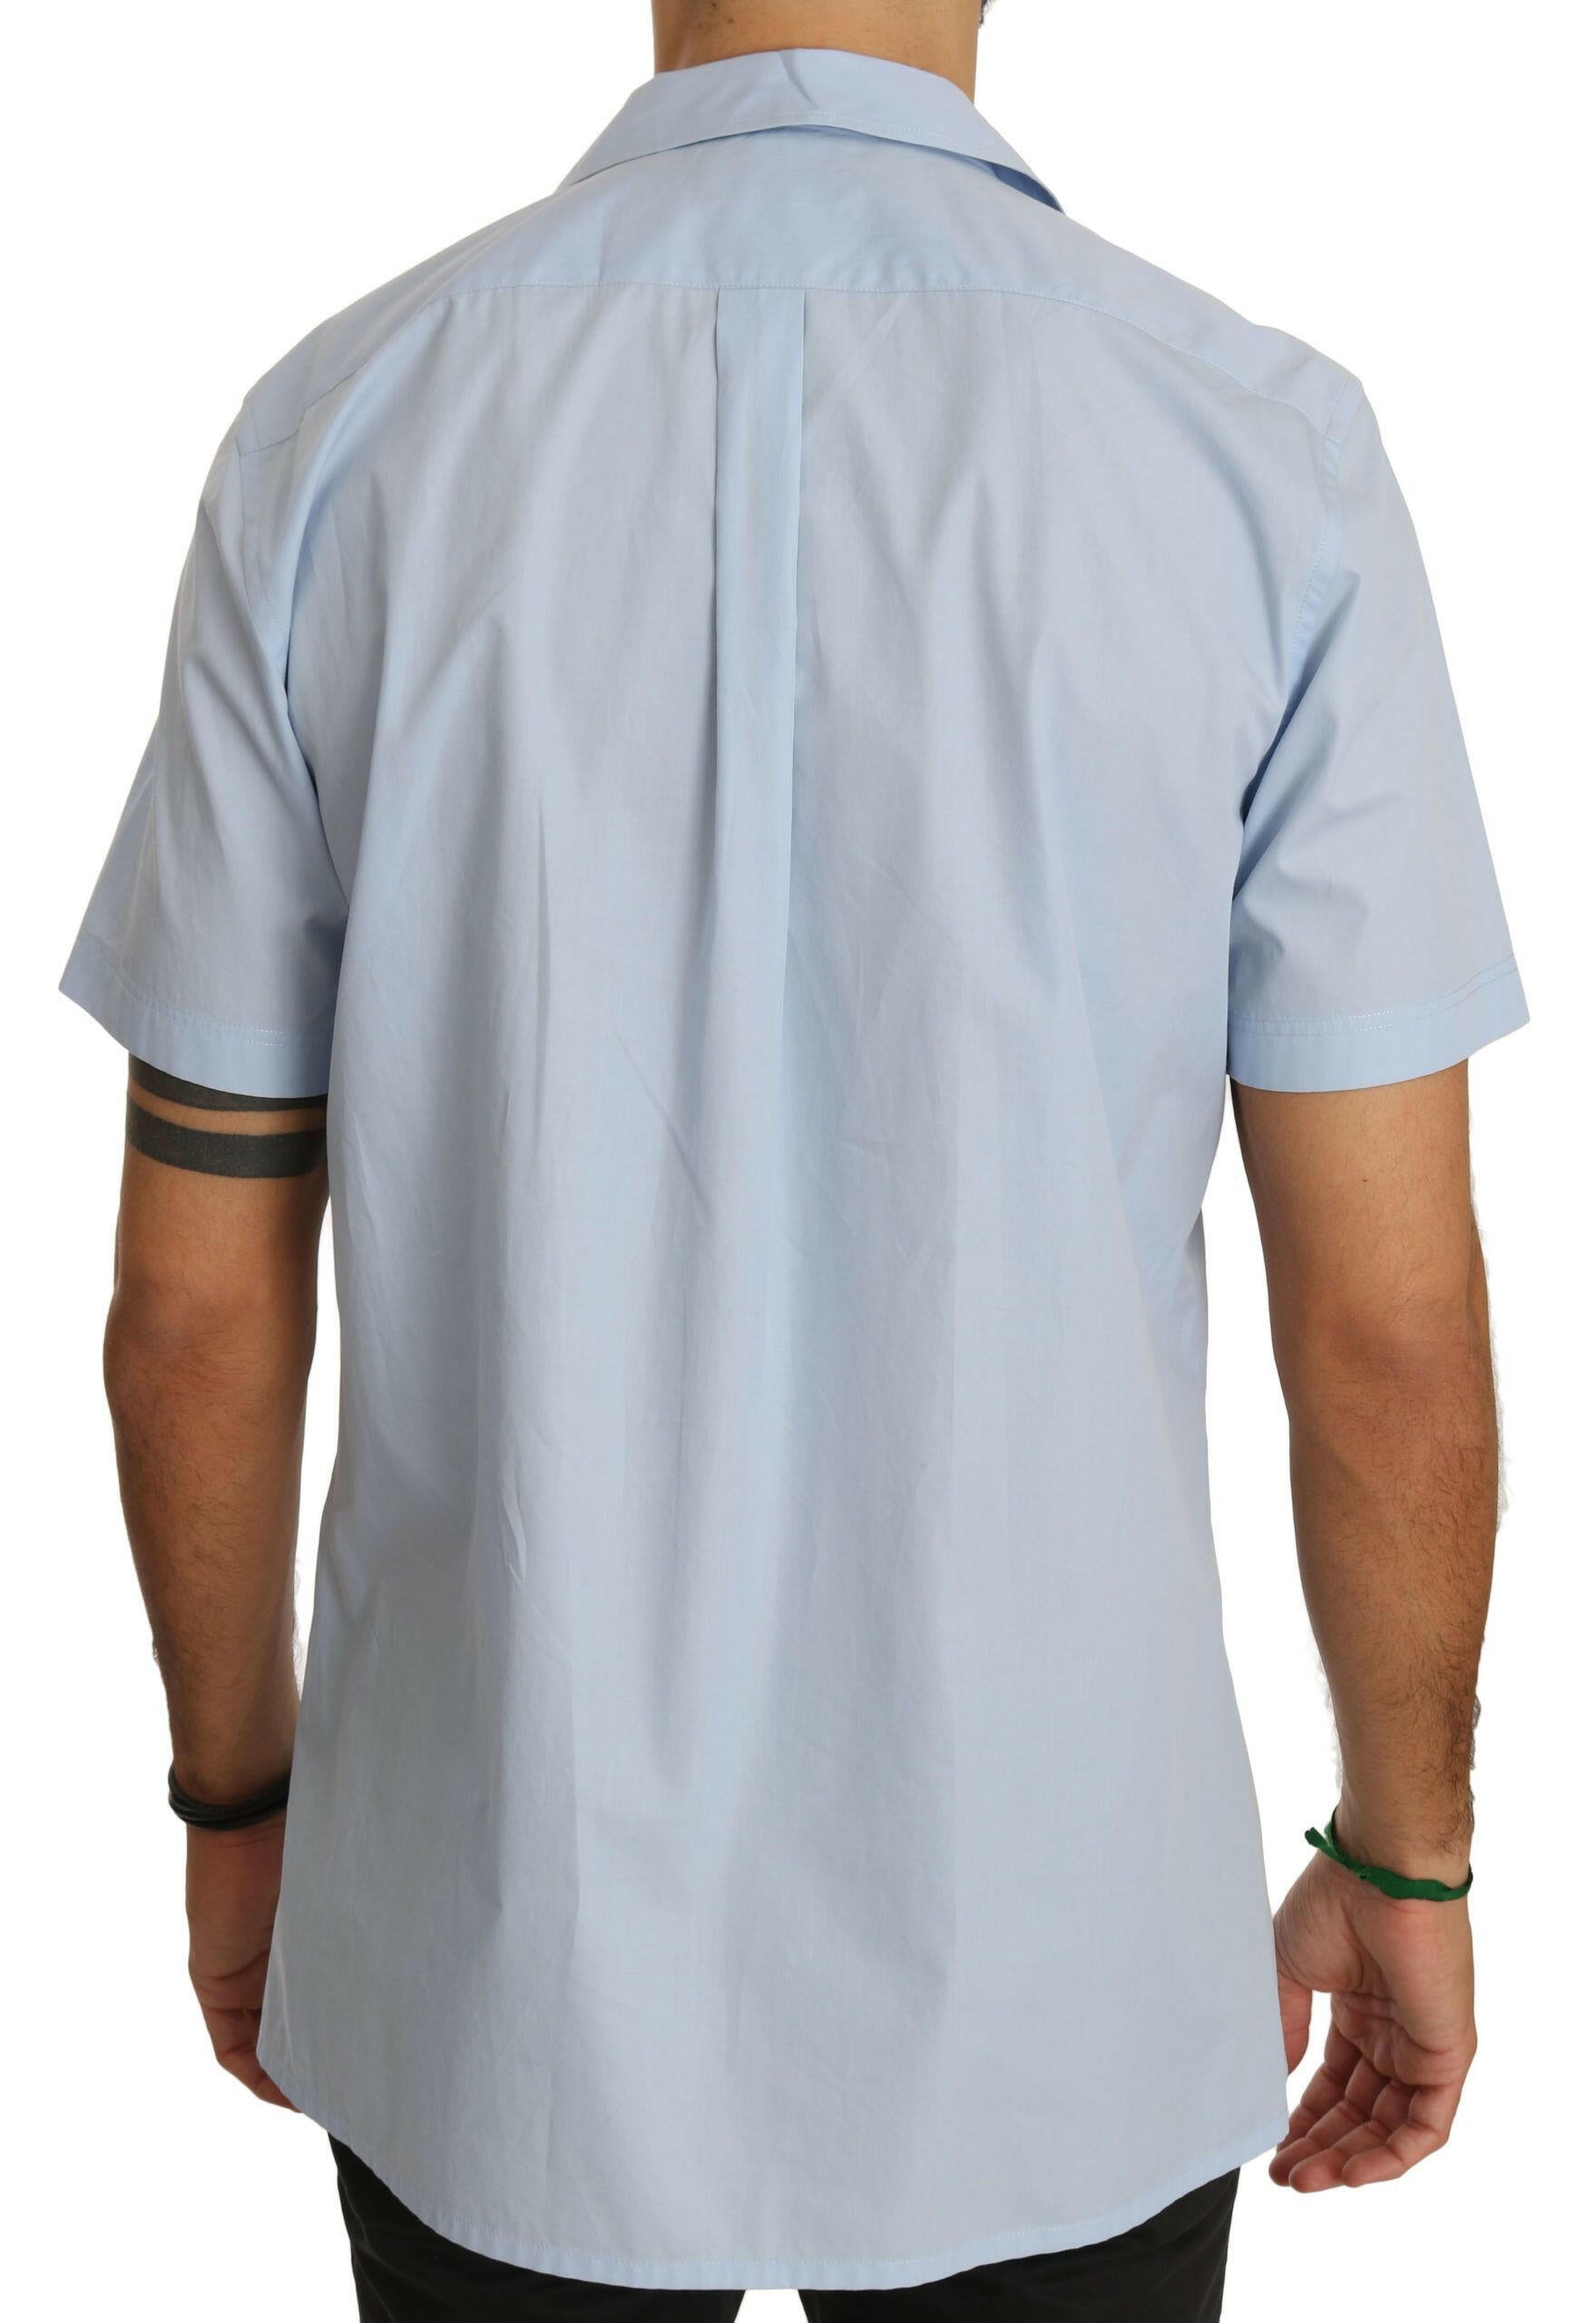 Dolce & Gabbana Blue Short Sleeve 100% Cotton Top Shirt - GENUINE AUTHENTIC BRAND LLC  